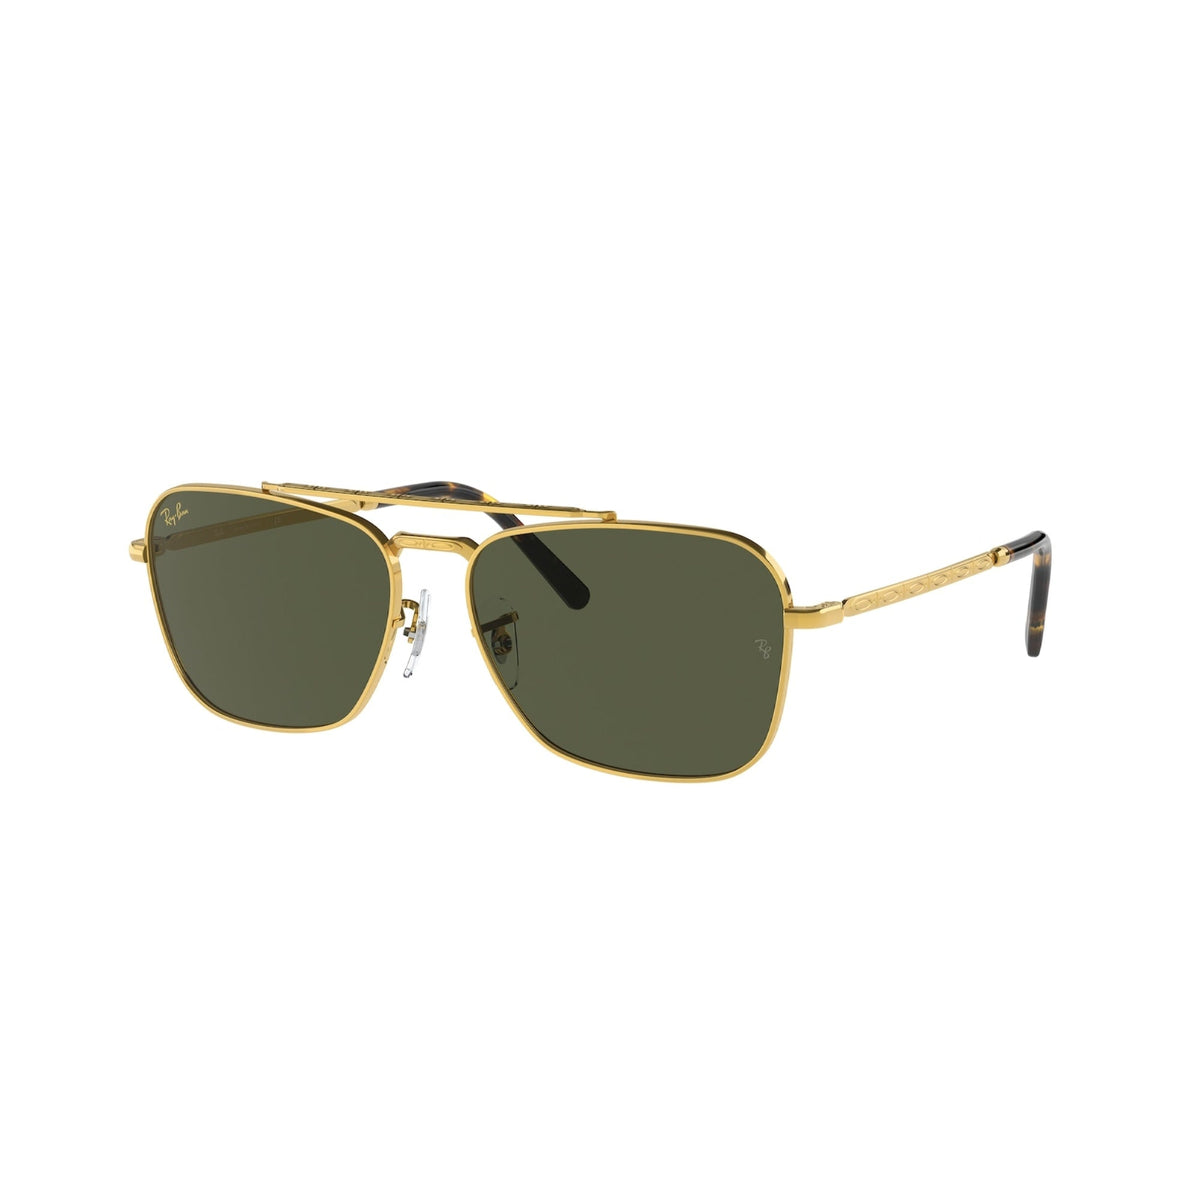 Ray-Ban Unisex Sunglasses New Caravan Gold Green Metal Metal  0RB3636 919631 58